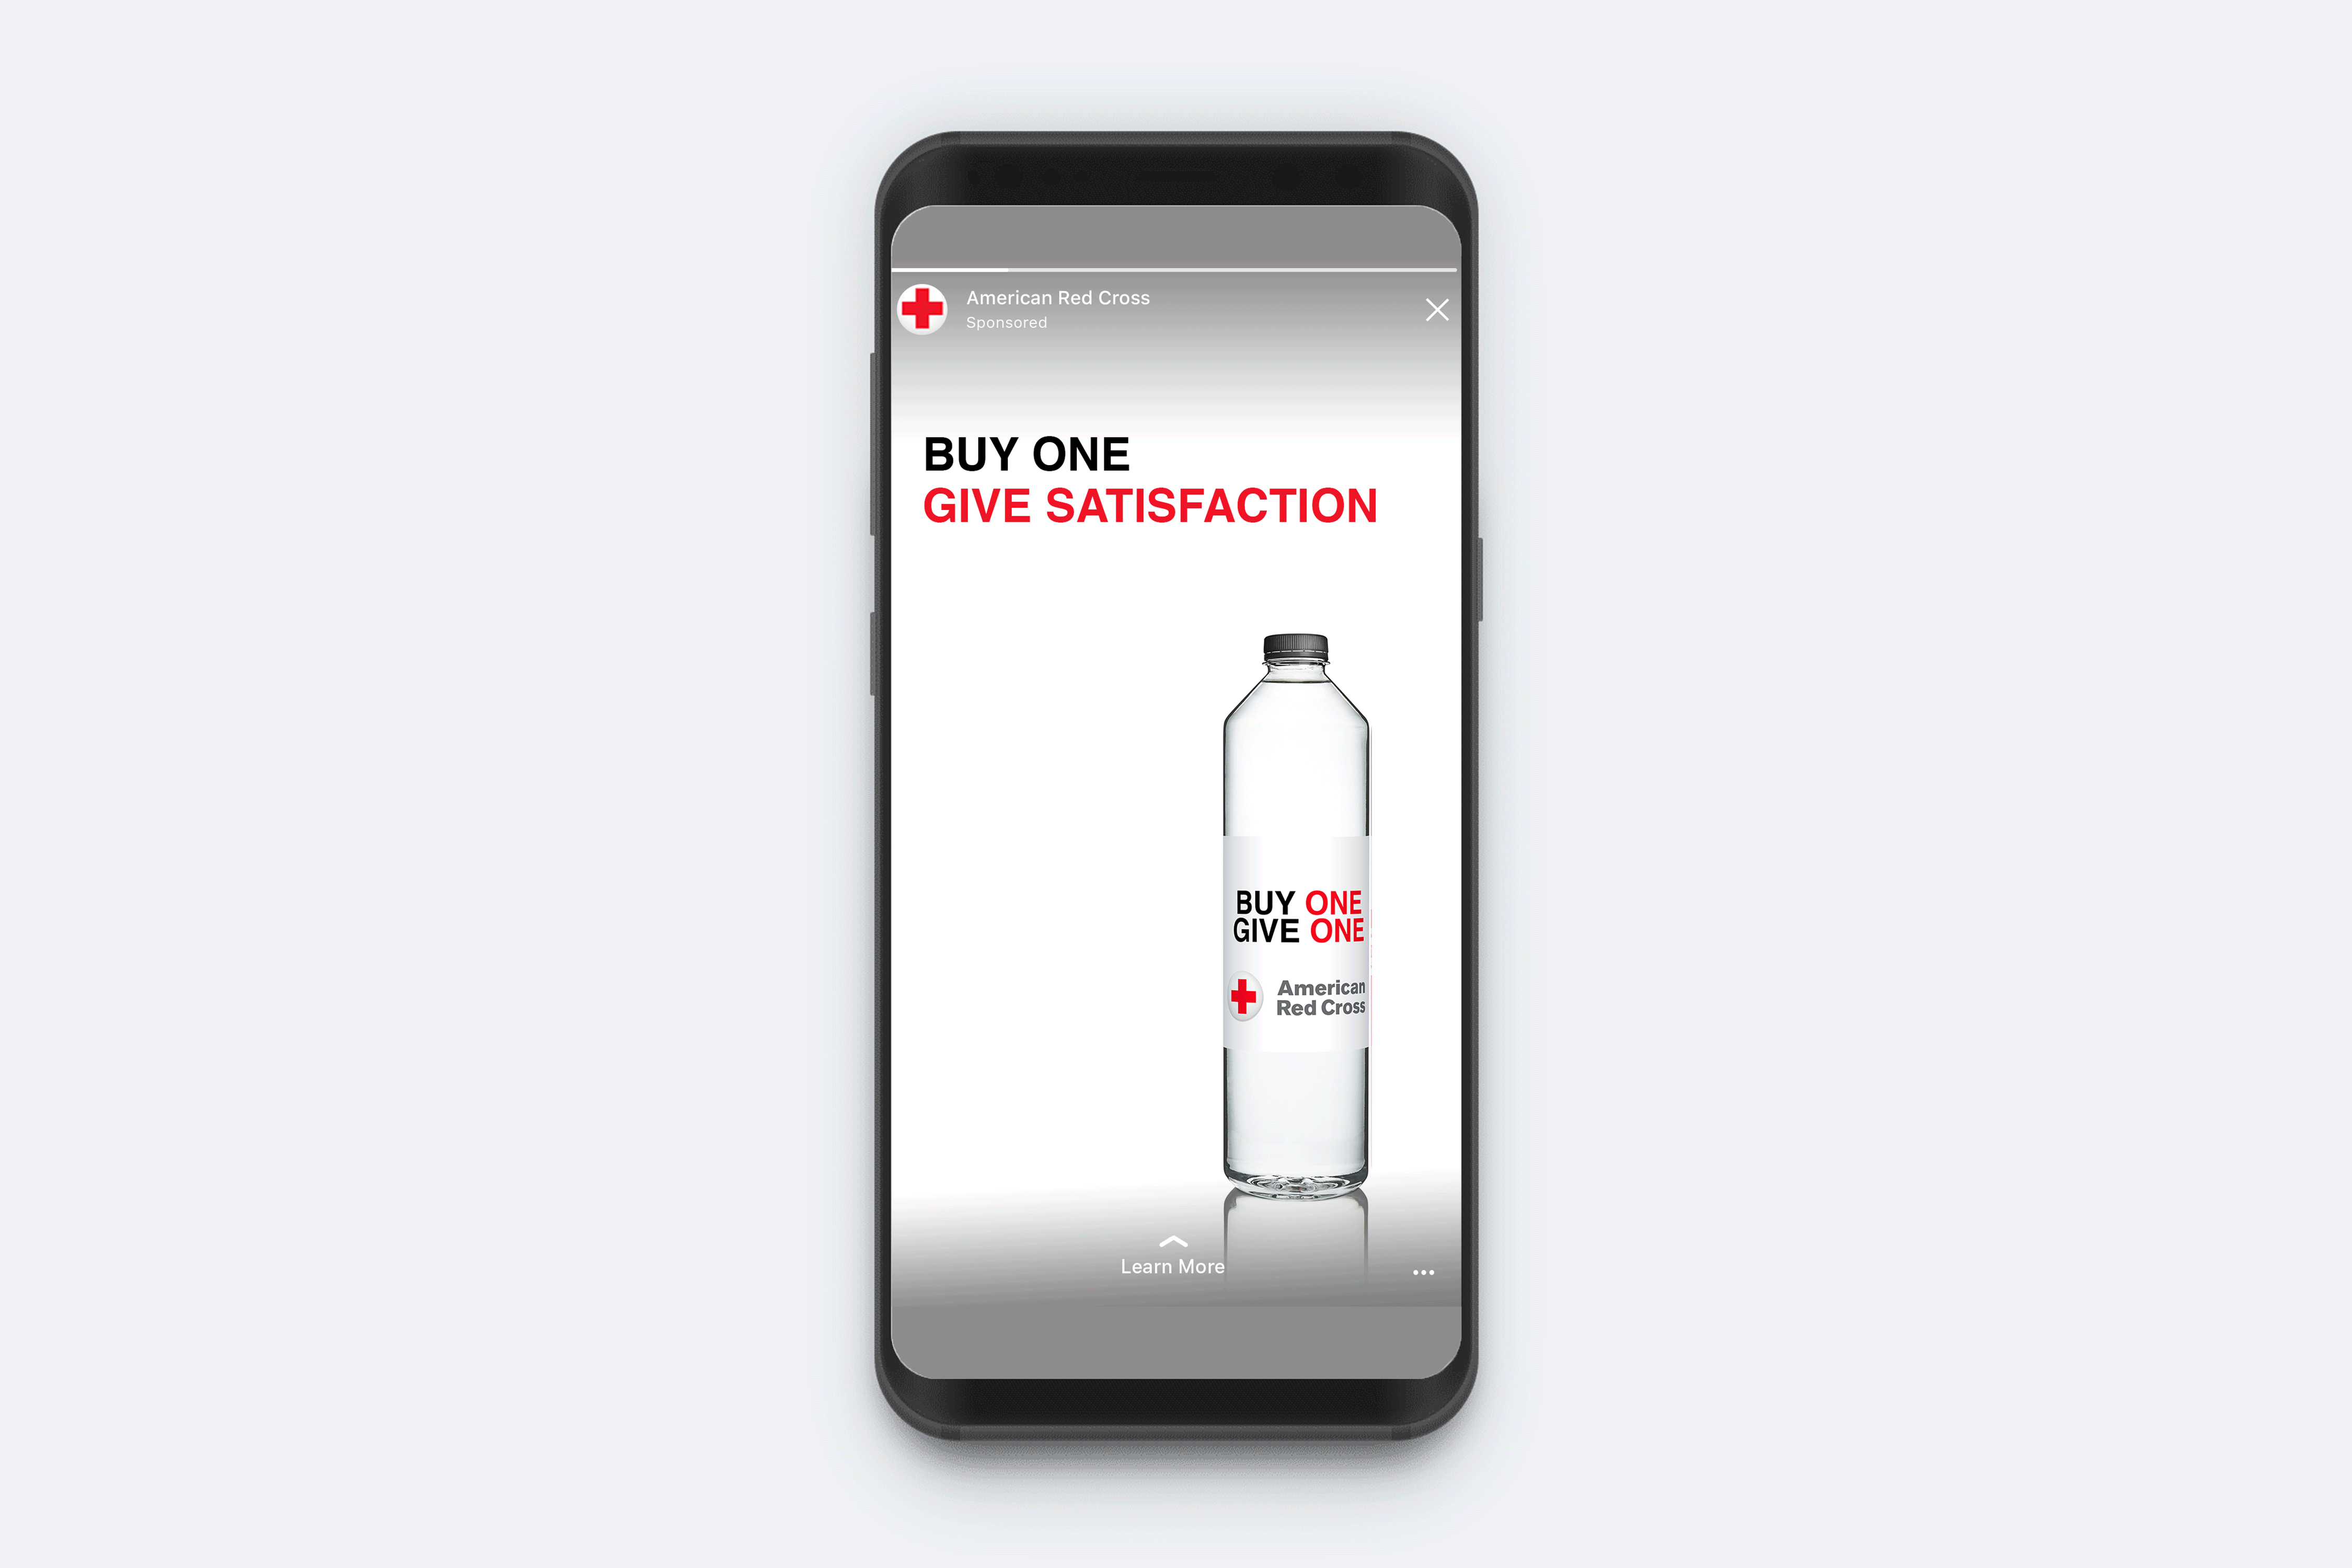 American Red Cross - CUF